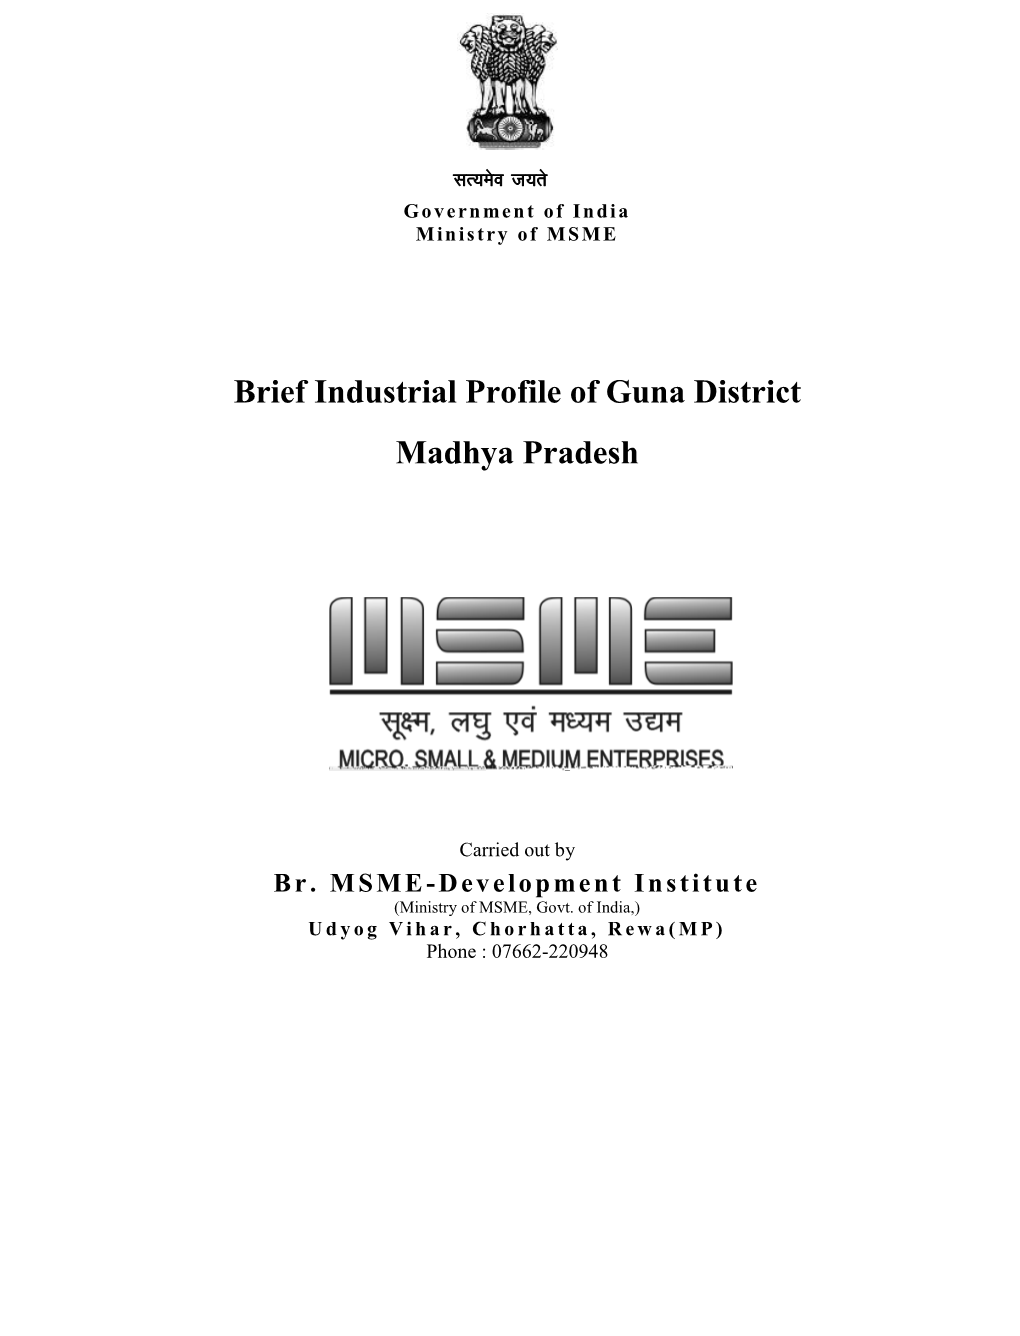 Brief Industrial Profile of Guna District Madhya Pradesh